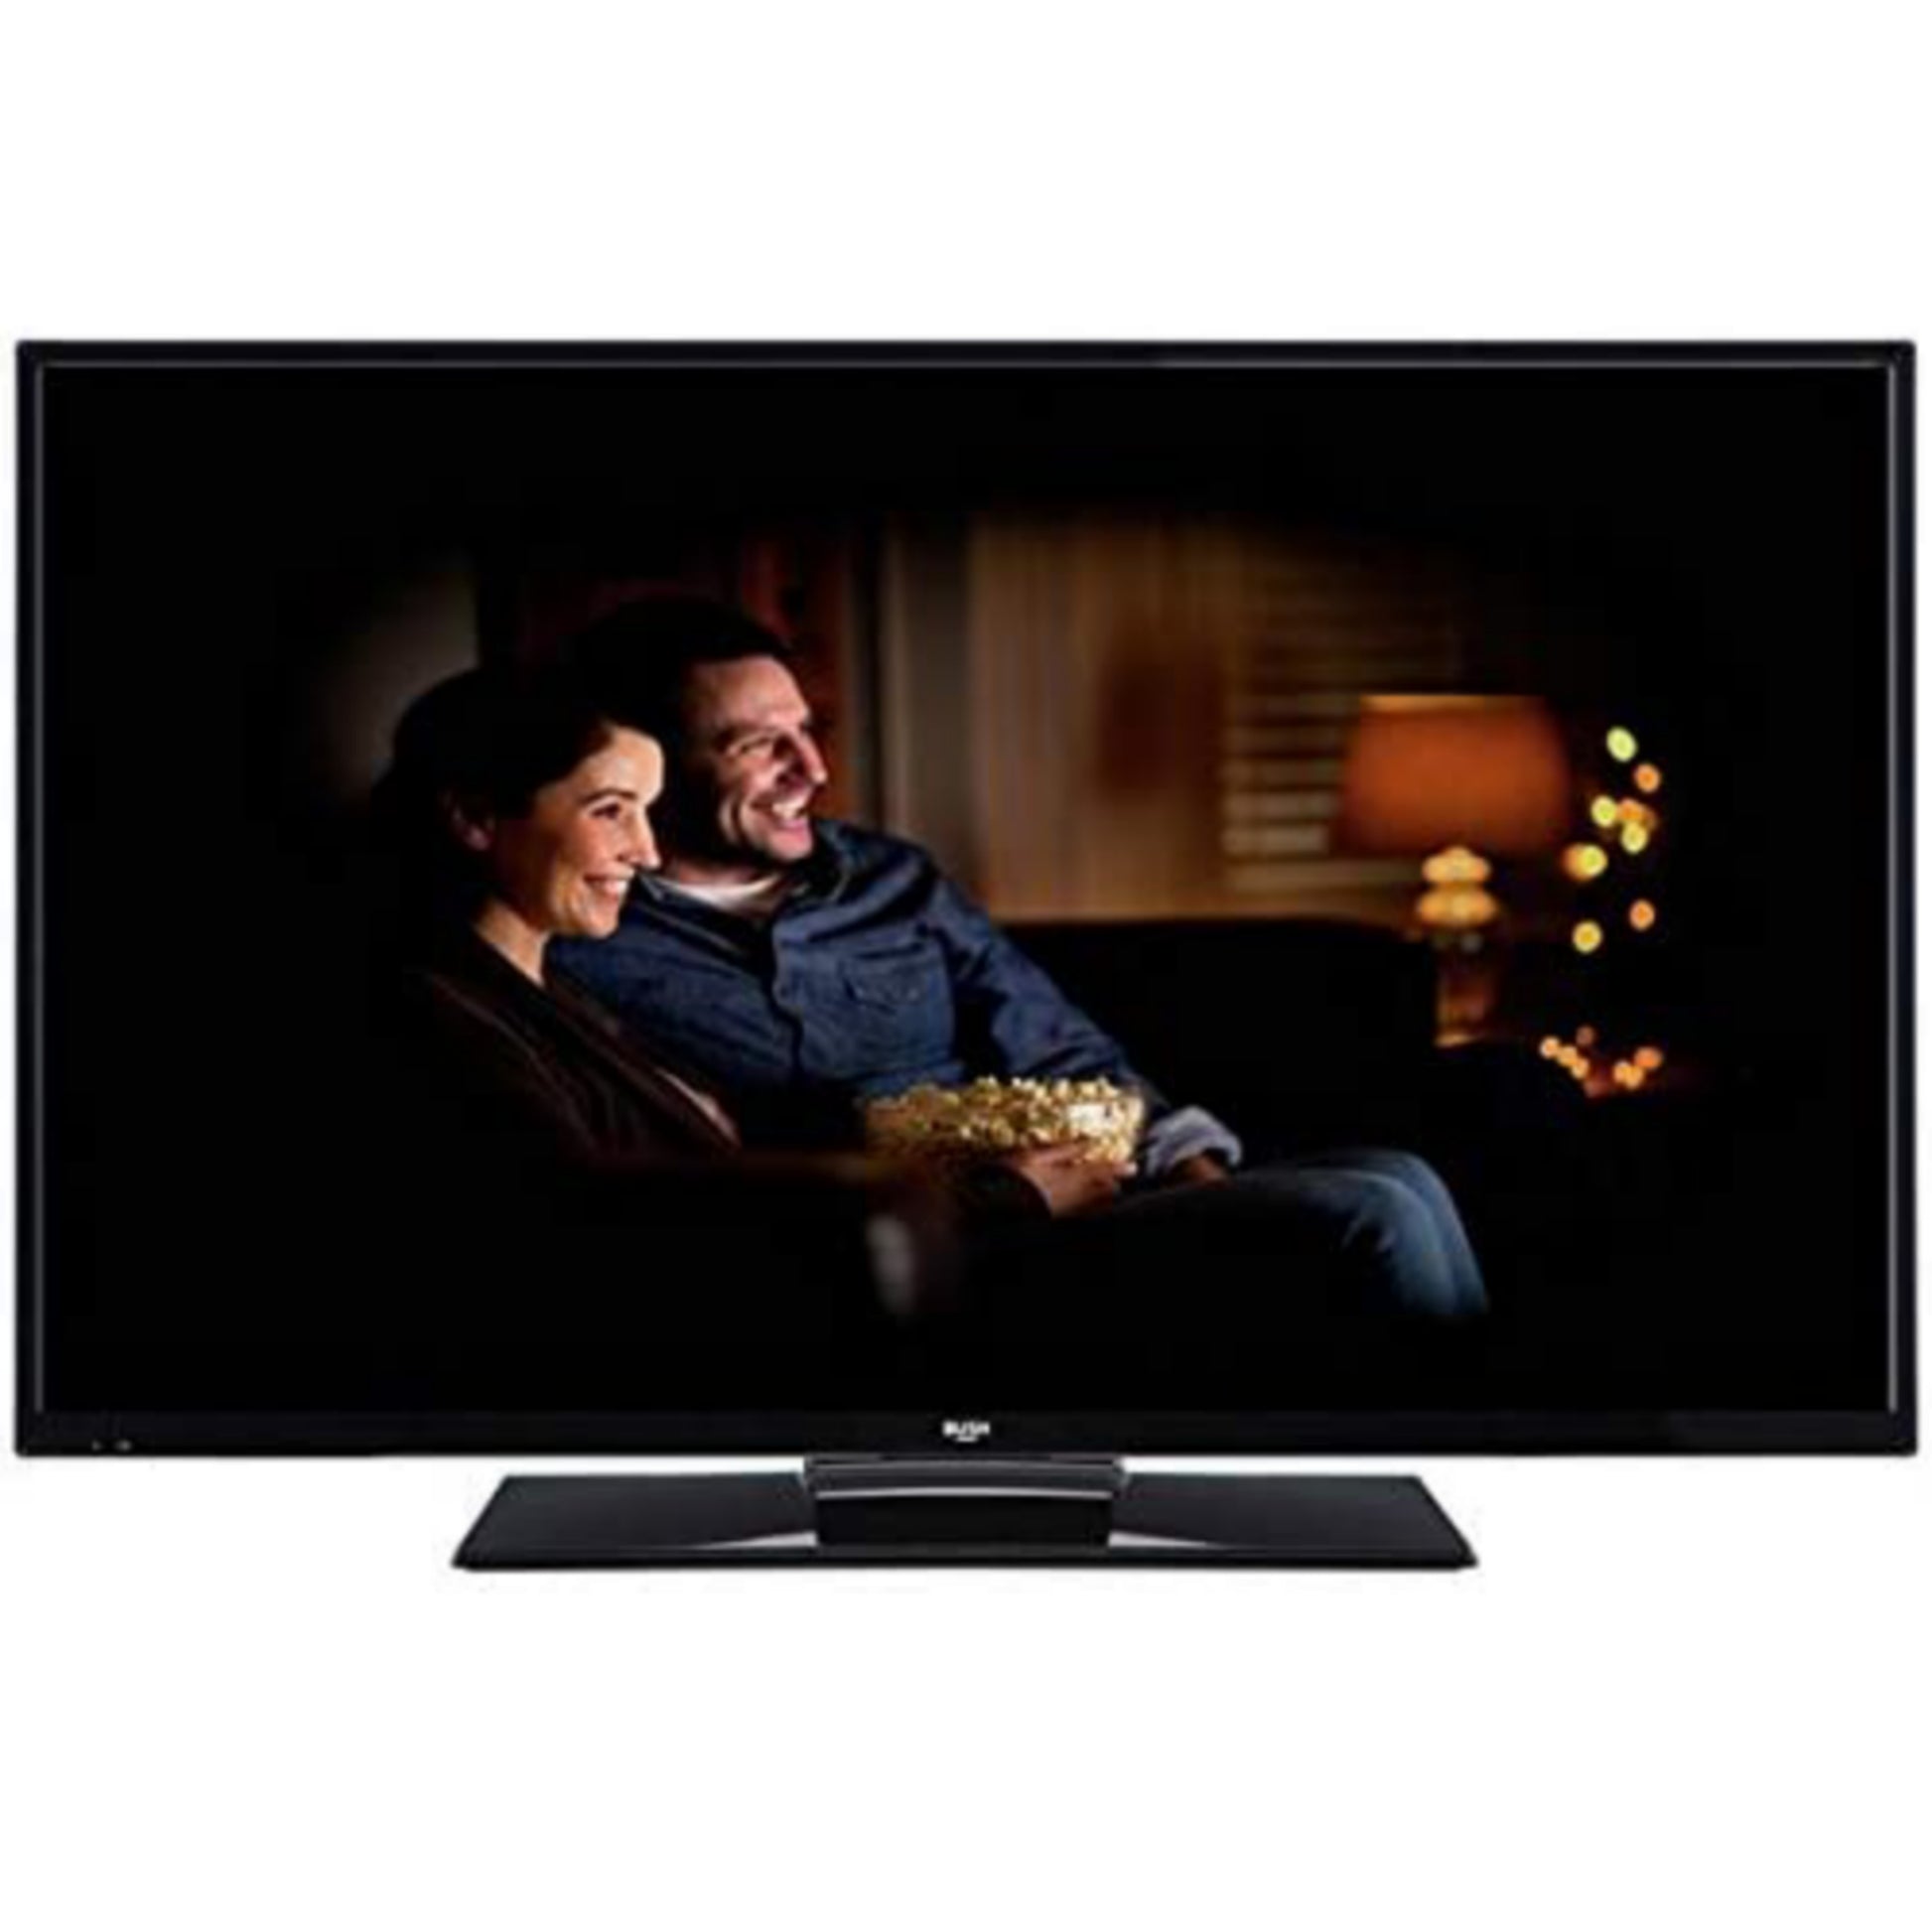 Bush 40 Inch Full HD LED TV - Fairly Used Tokunbo